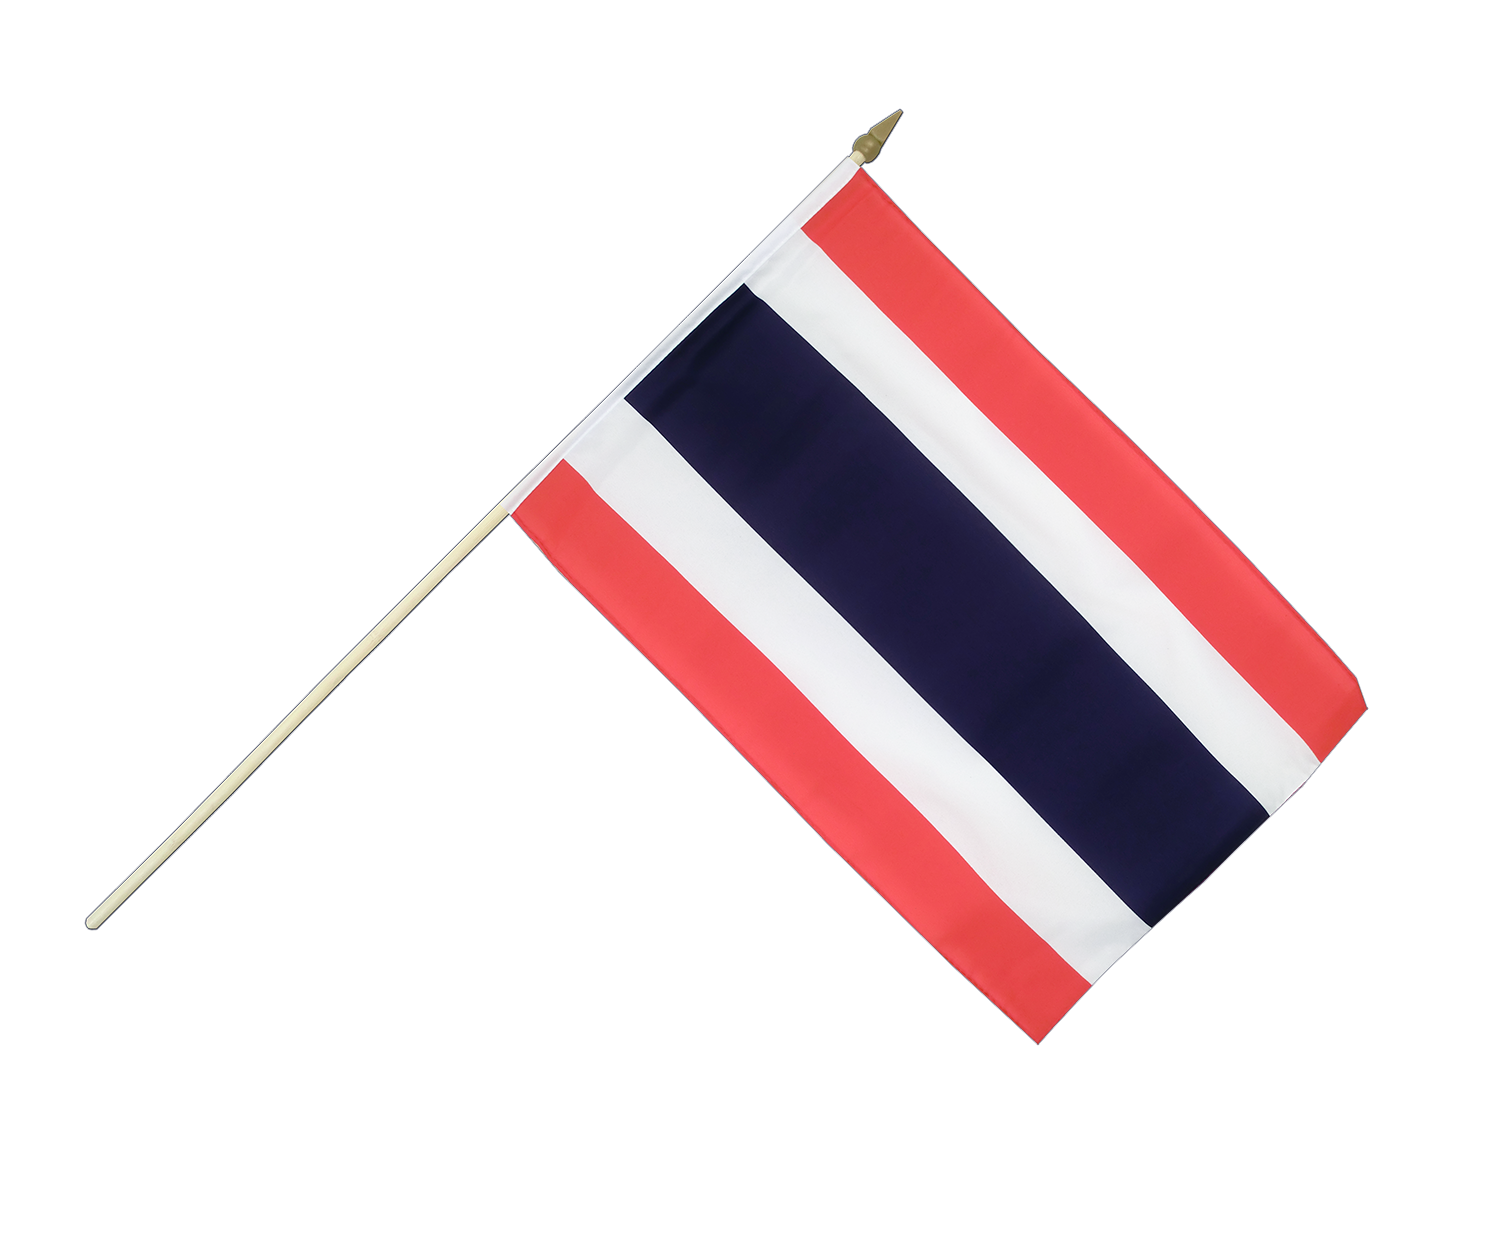 Thailand Flag Transparent PNG